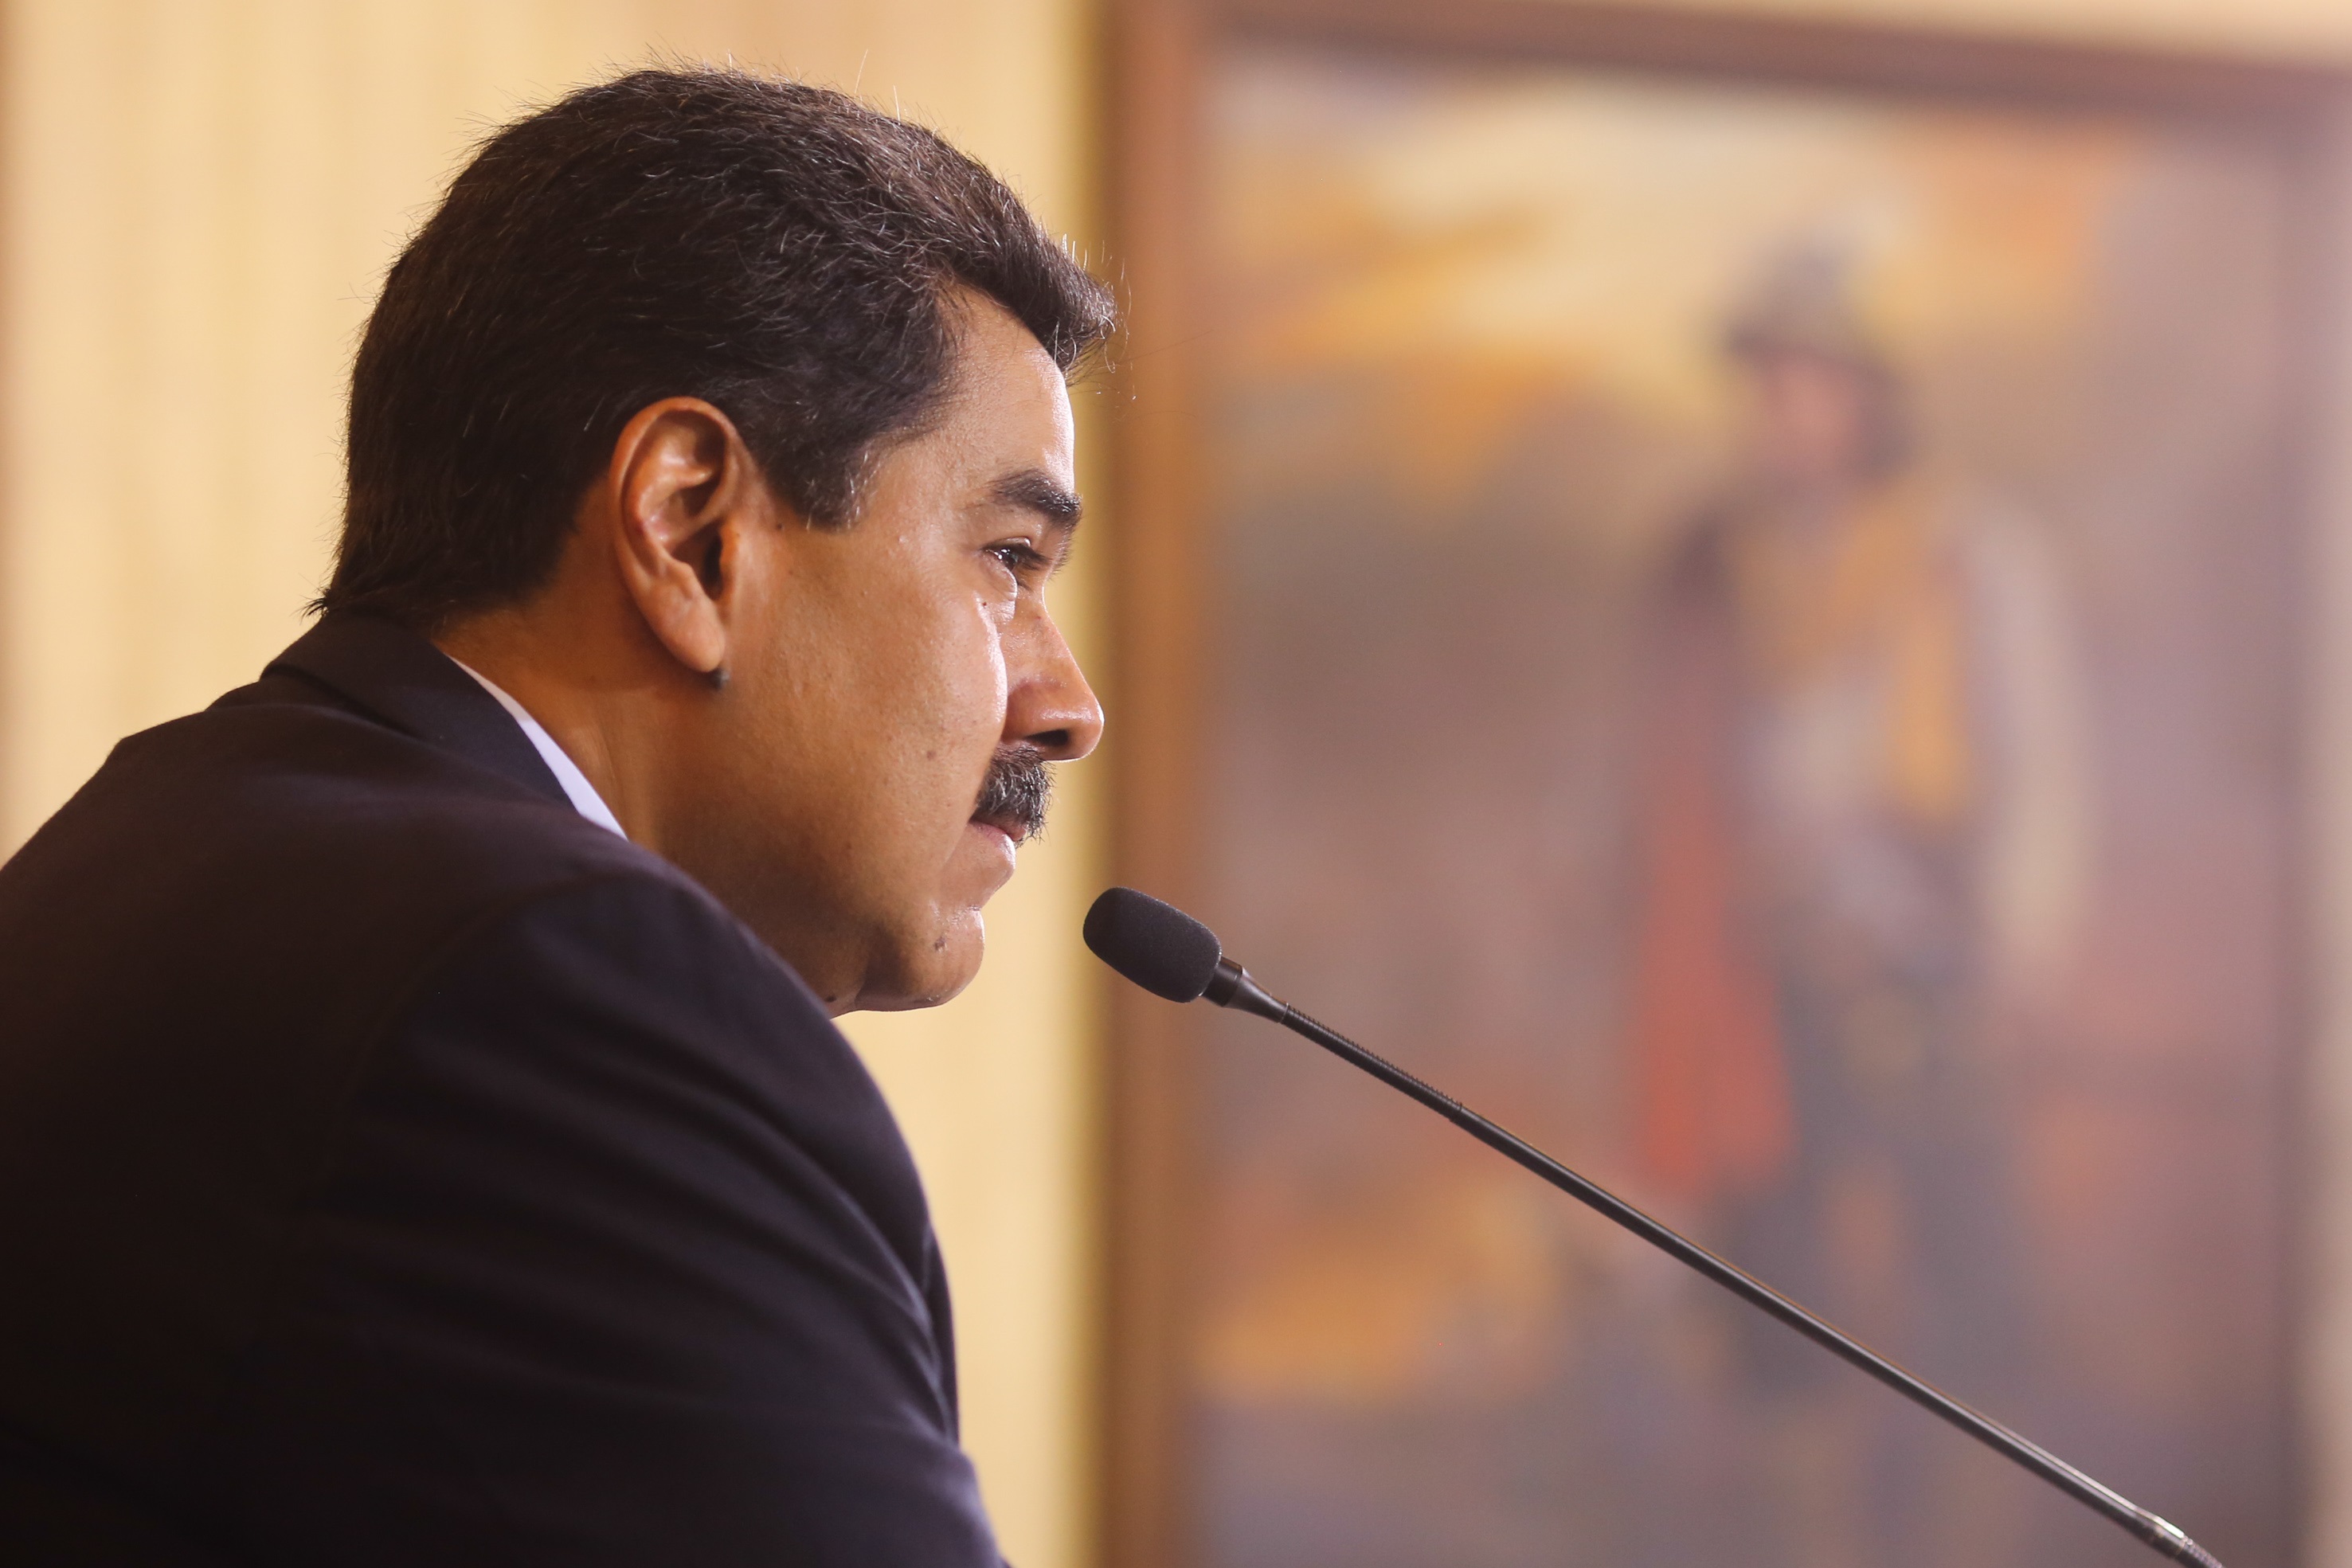 El presidente de Venezuela, Nicolás Maduro.
POLITICA SUDAMÉRICA VENEZUELA LATINOAMÉRICA INTERNACIONAL
MARCELO GARCÍA / ZUMA PRESS / CONTACTOPHOTO
